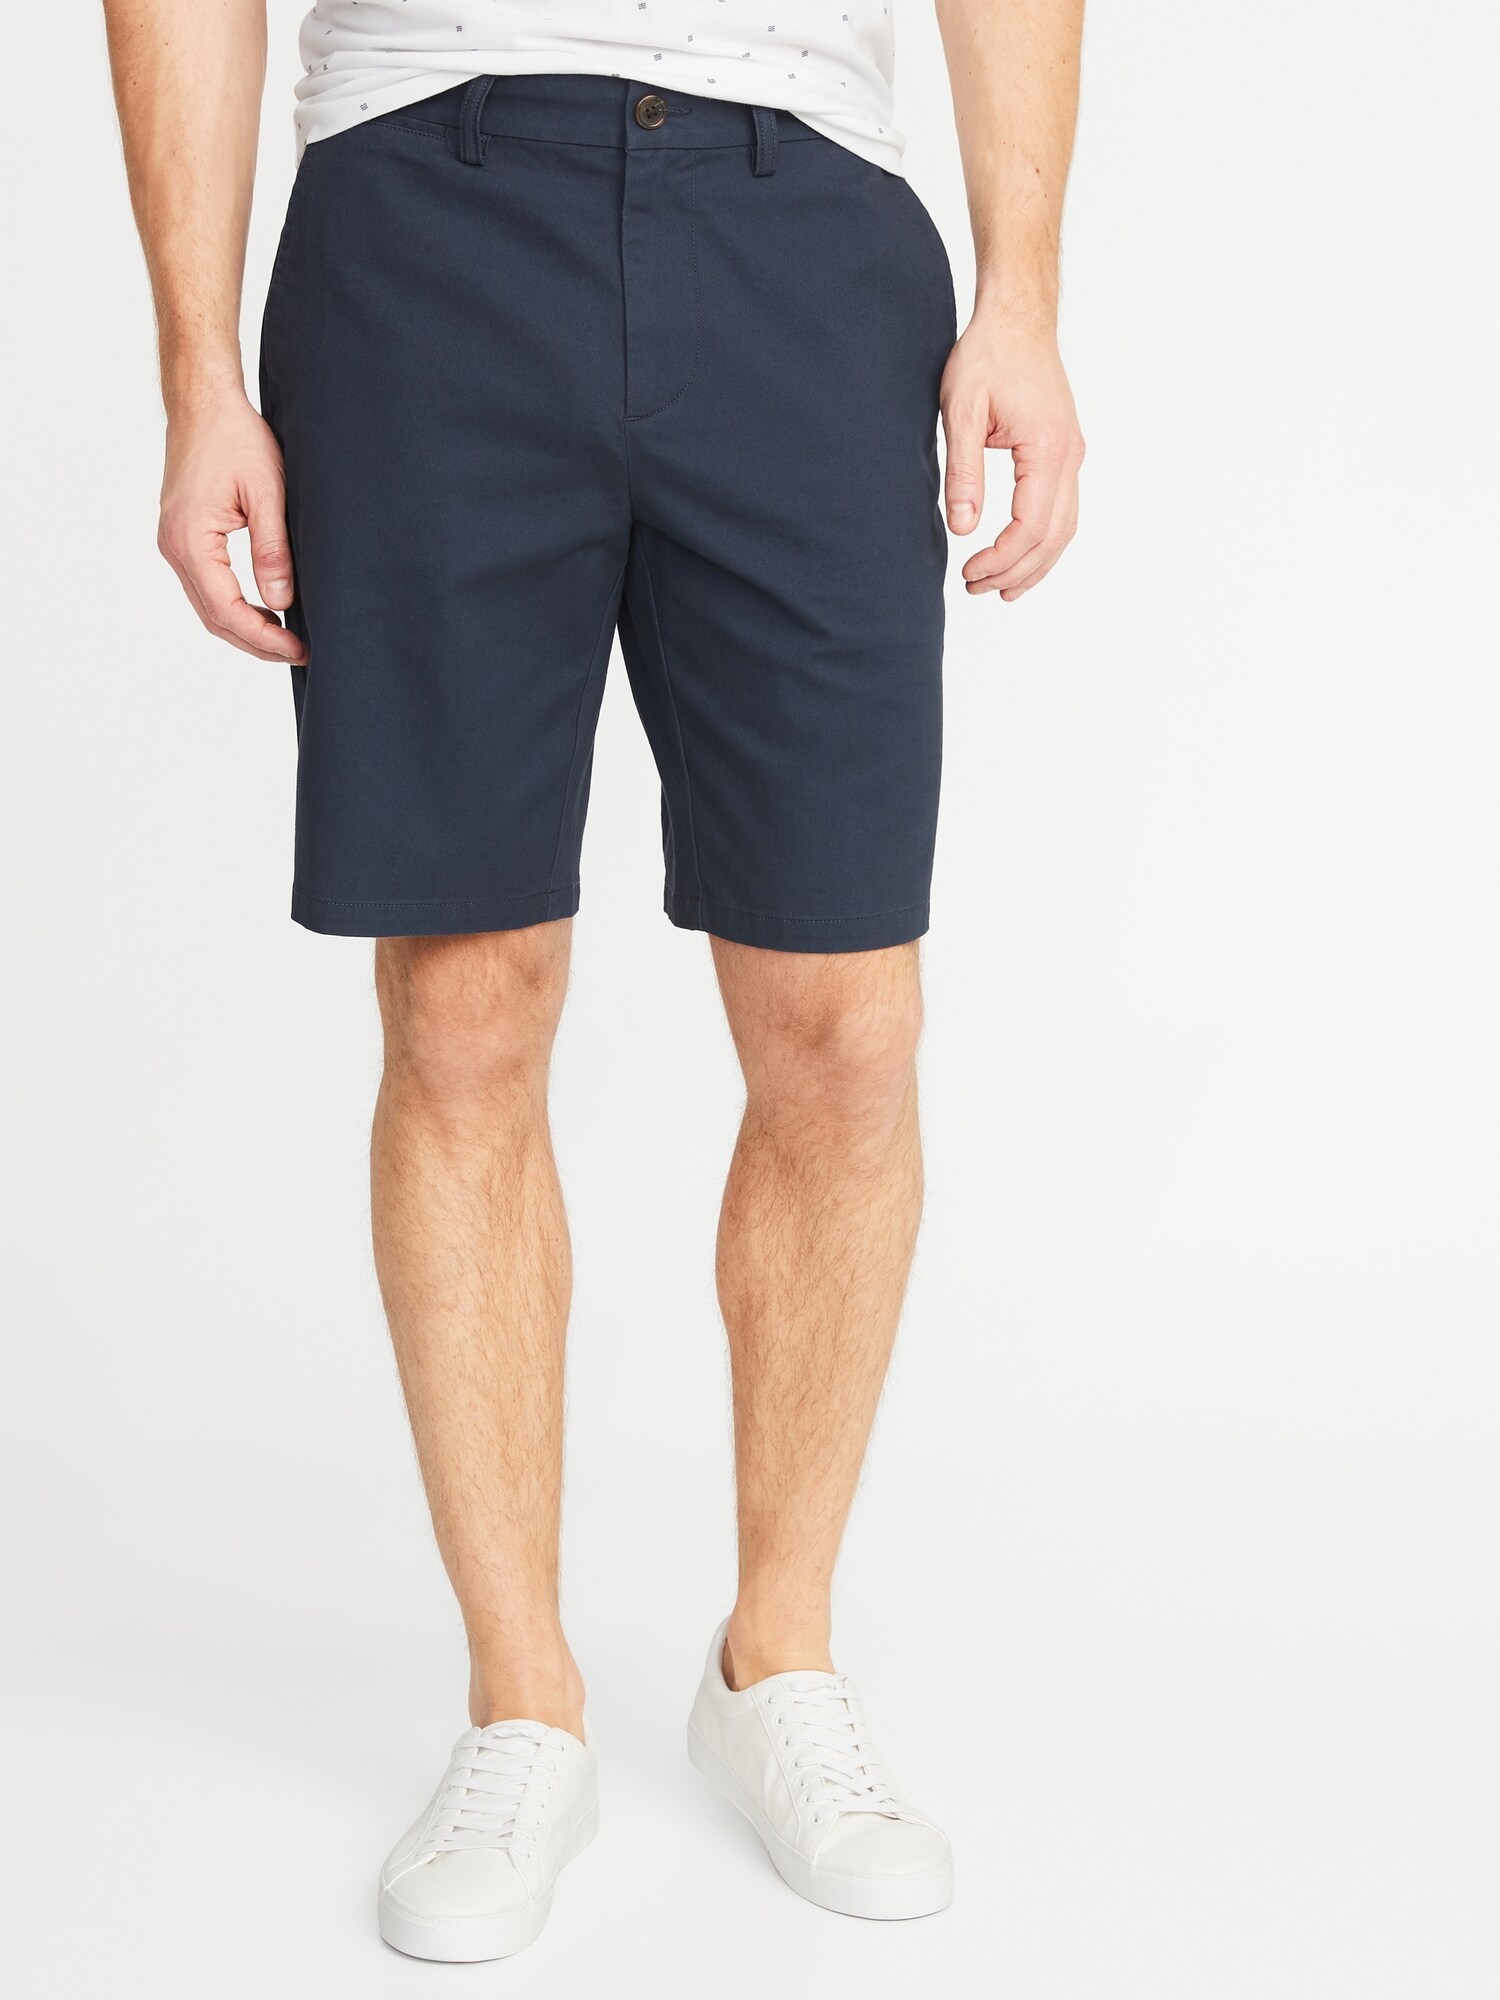 *Hot Deal* Slim Ultimate Shorts for Men - 10 inch inseam